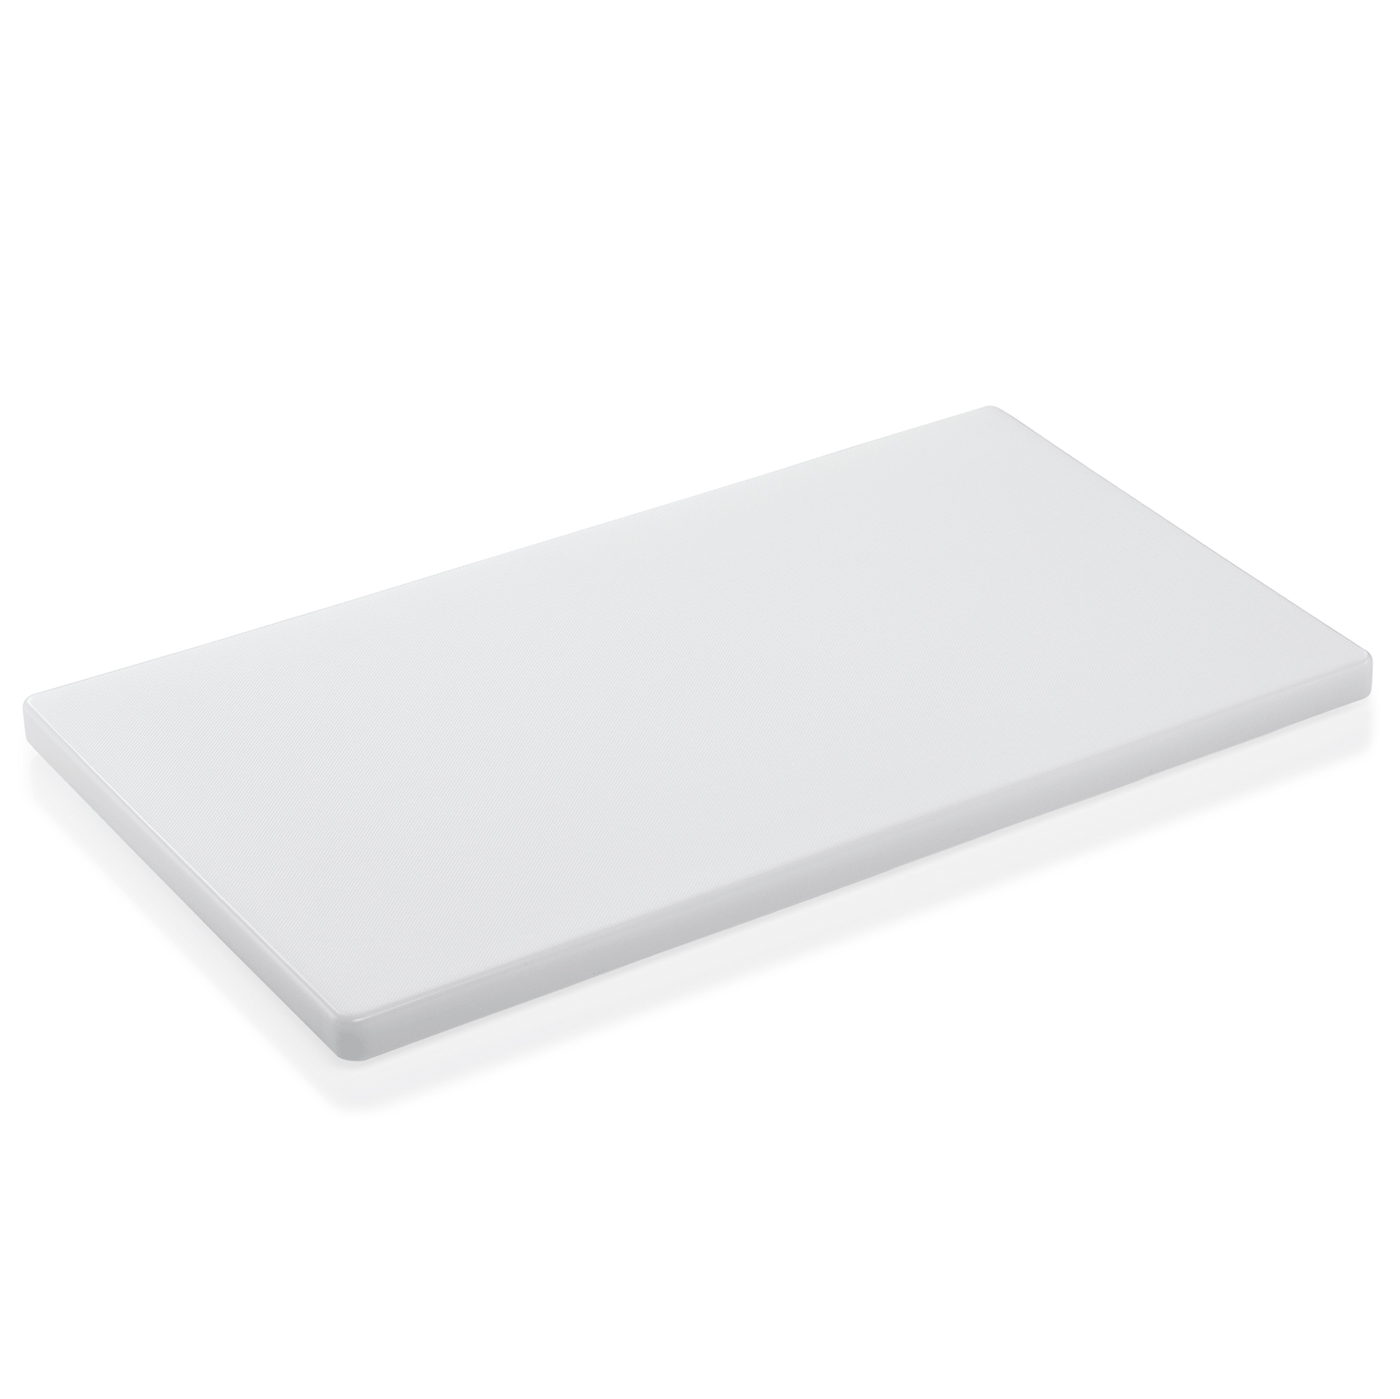 GN 1/1 HACCP Schneidbrett, Material: Polyethylen. Farbe: weiß. Maße: Höhe: 20 mm